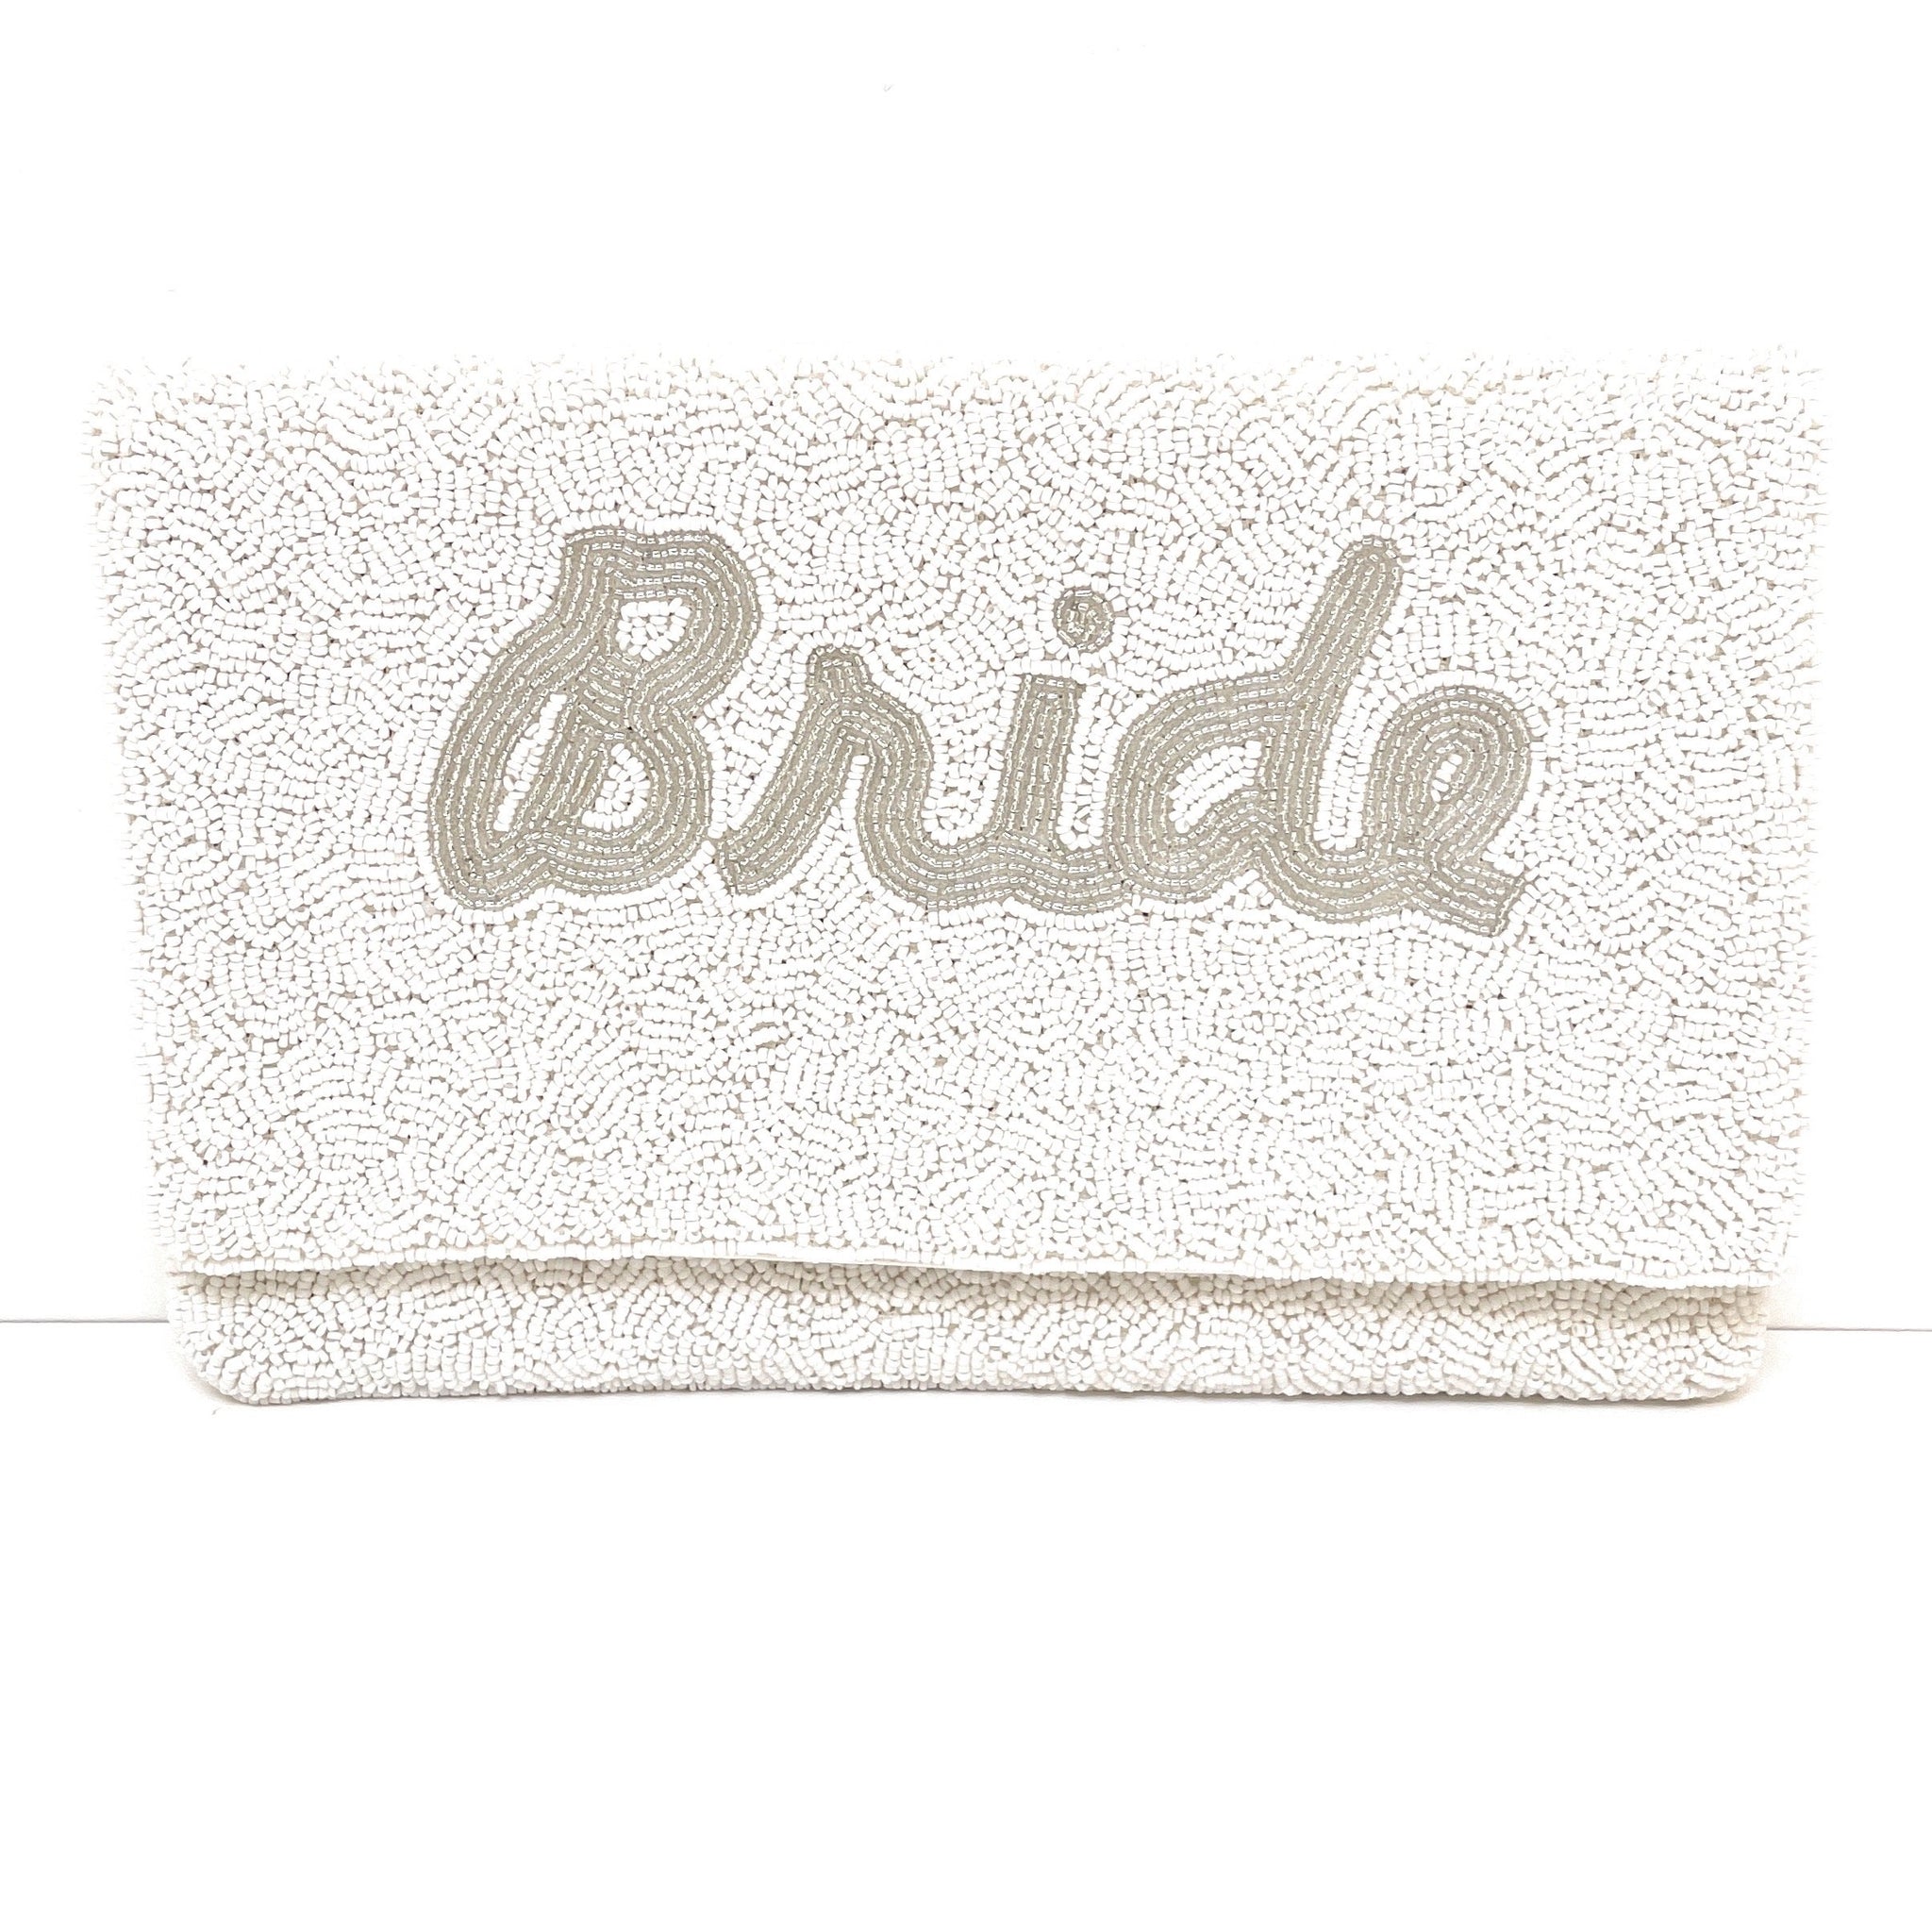 POTLI BAGS FOR WOMEN EVENING BAG CLUTCH ETHNIC BRIDE PURSE WITH DRAWSTRING  (CB) | eBay